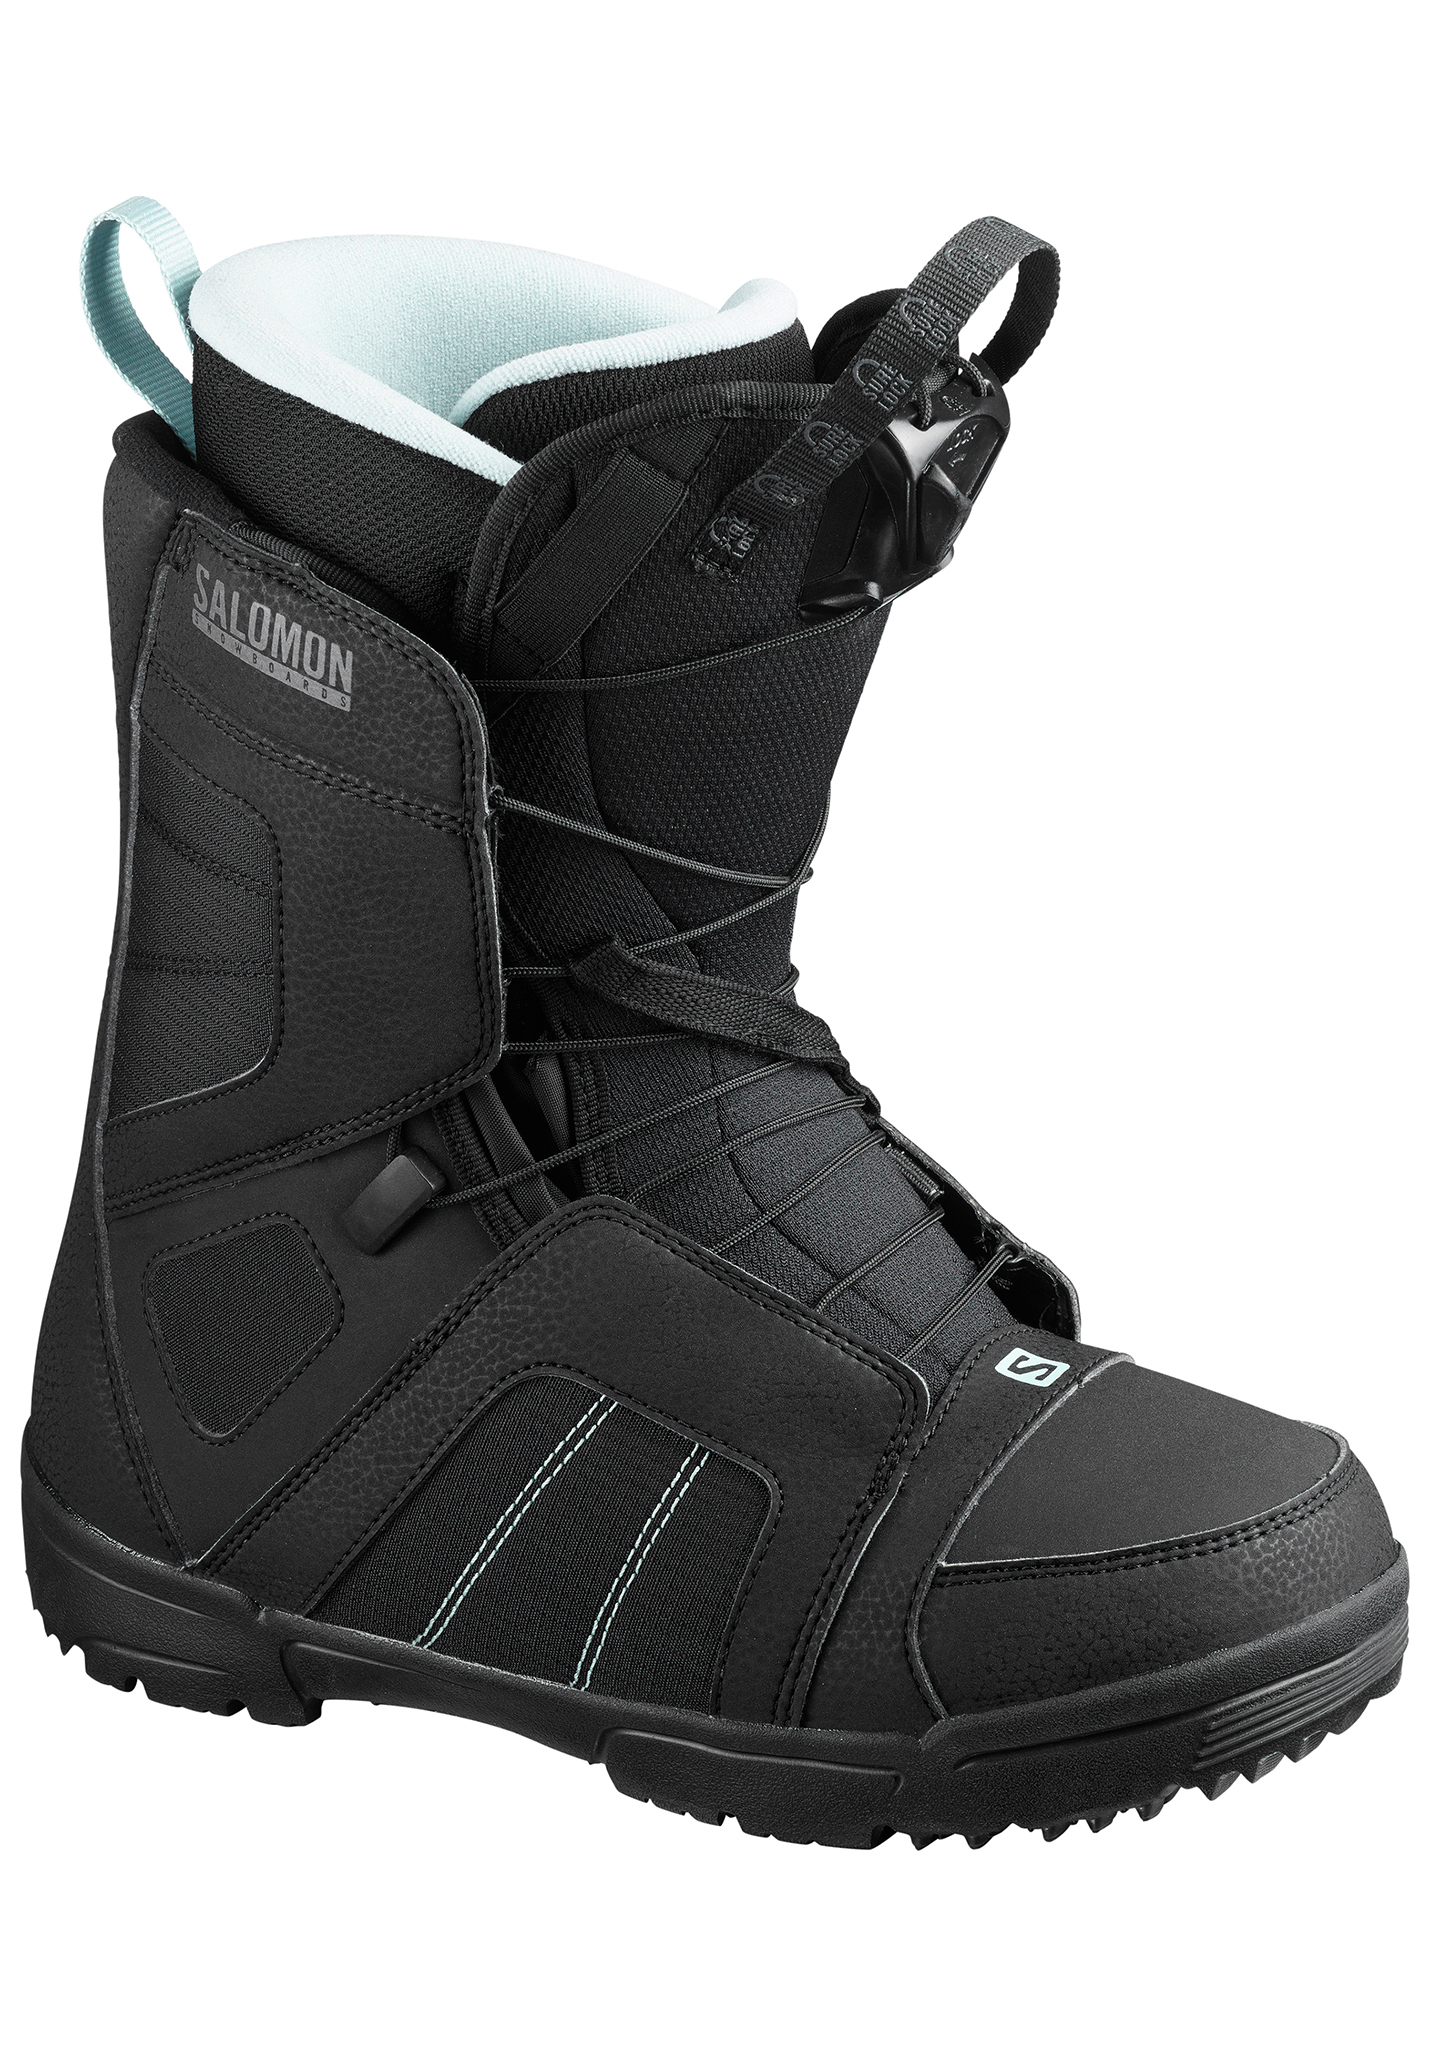 Salomon Scarlet All Mountain Snowboard Boots schwarz/schwarz/sterlingblau 38,5